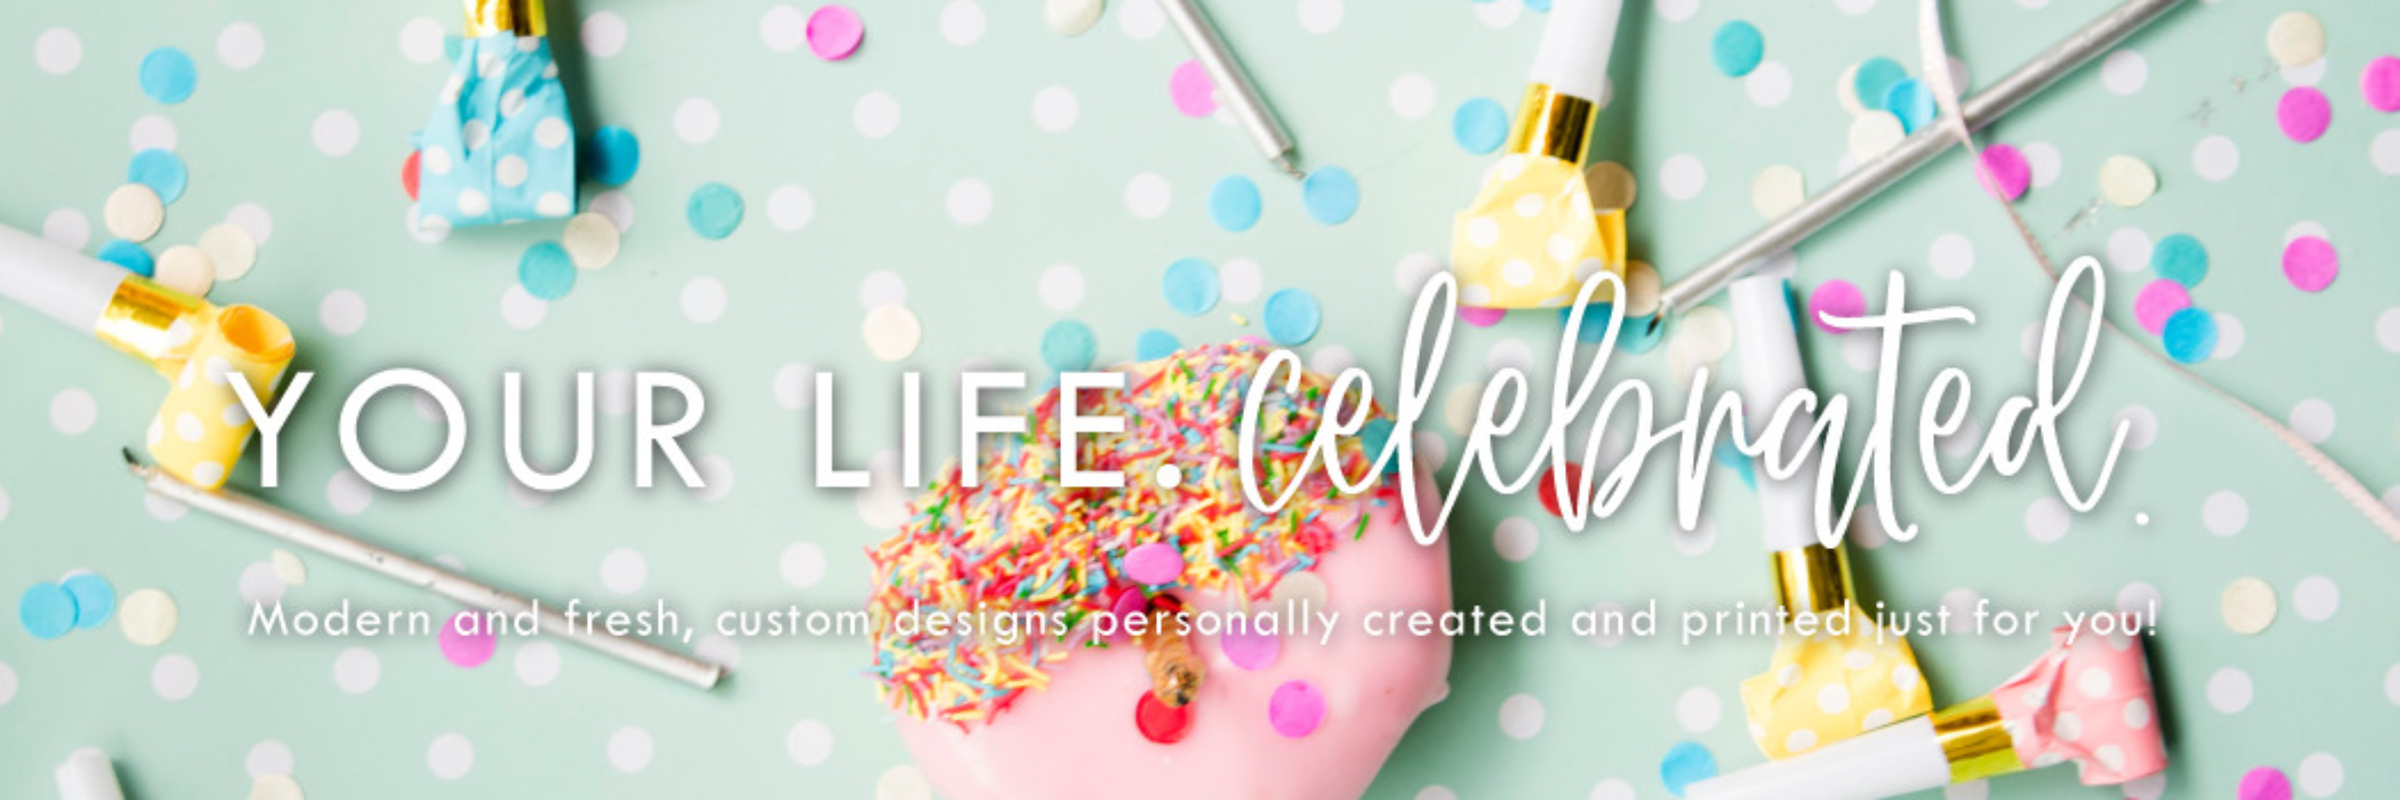 raspberry-creative-your-life-celebrated-2